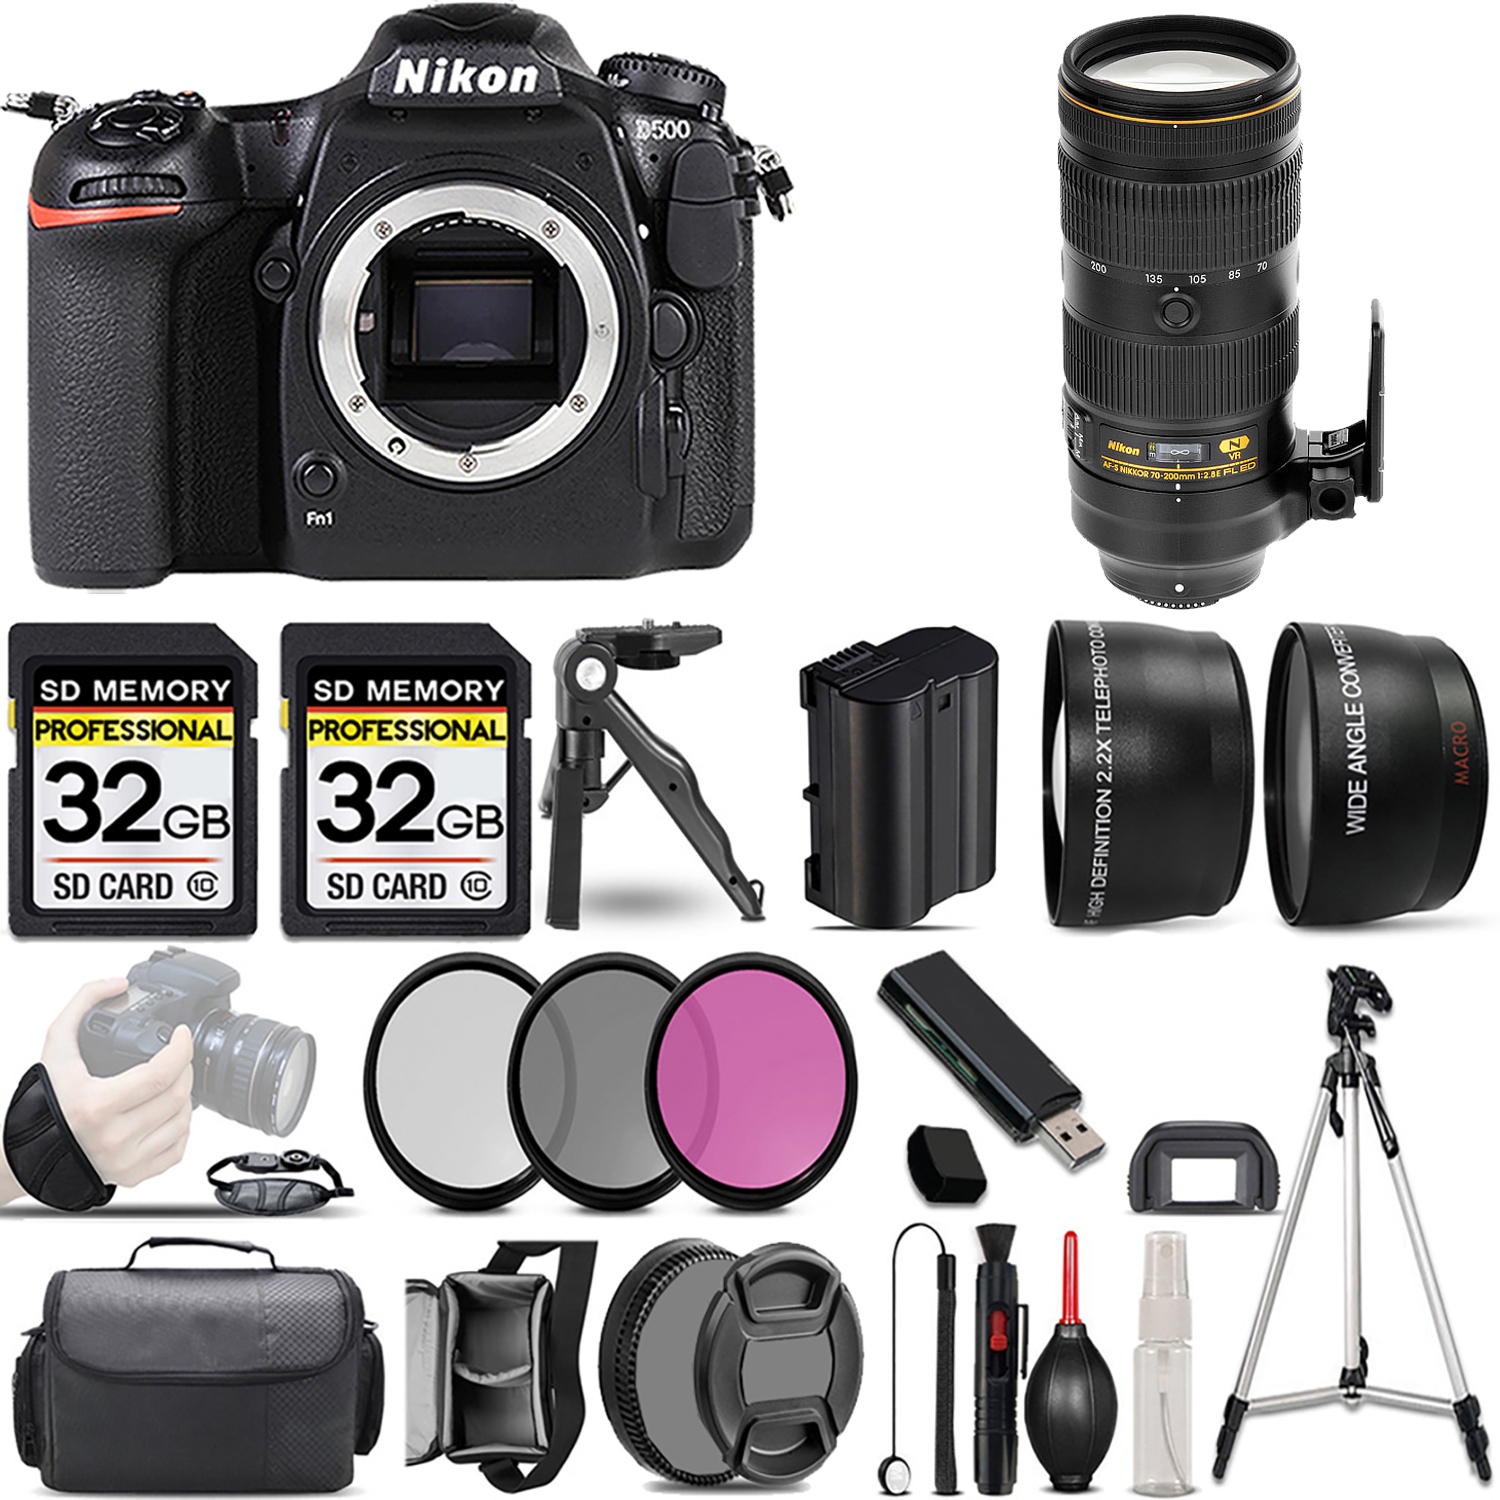 D500 DSLR Camera + 70-200mm f/2.8E FL ED VR Lens + 3 Piece Filter Set + 64GB *FREE SHIPPING*